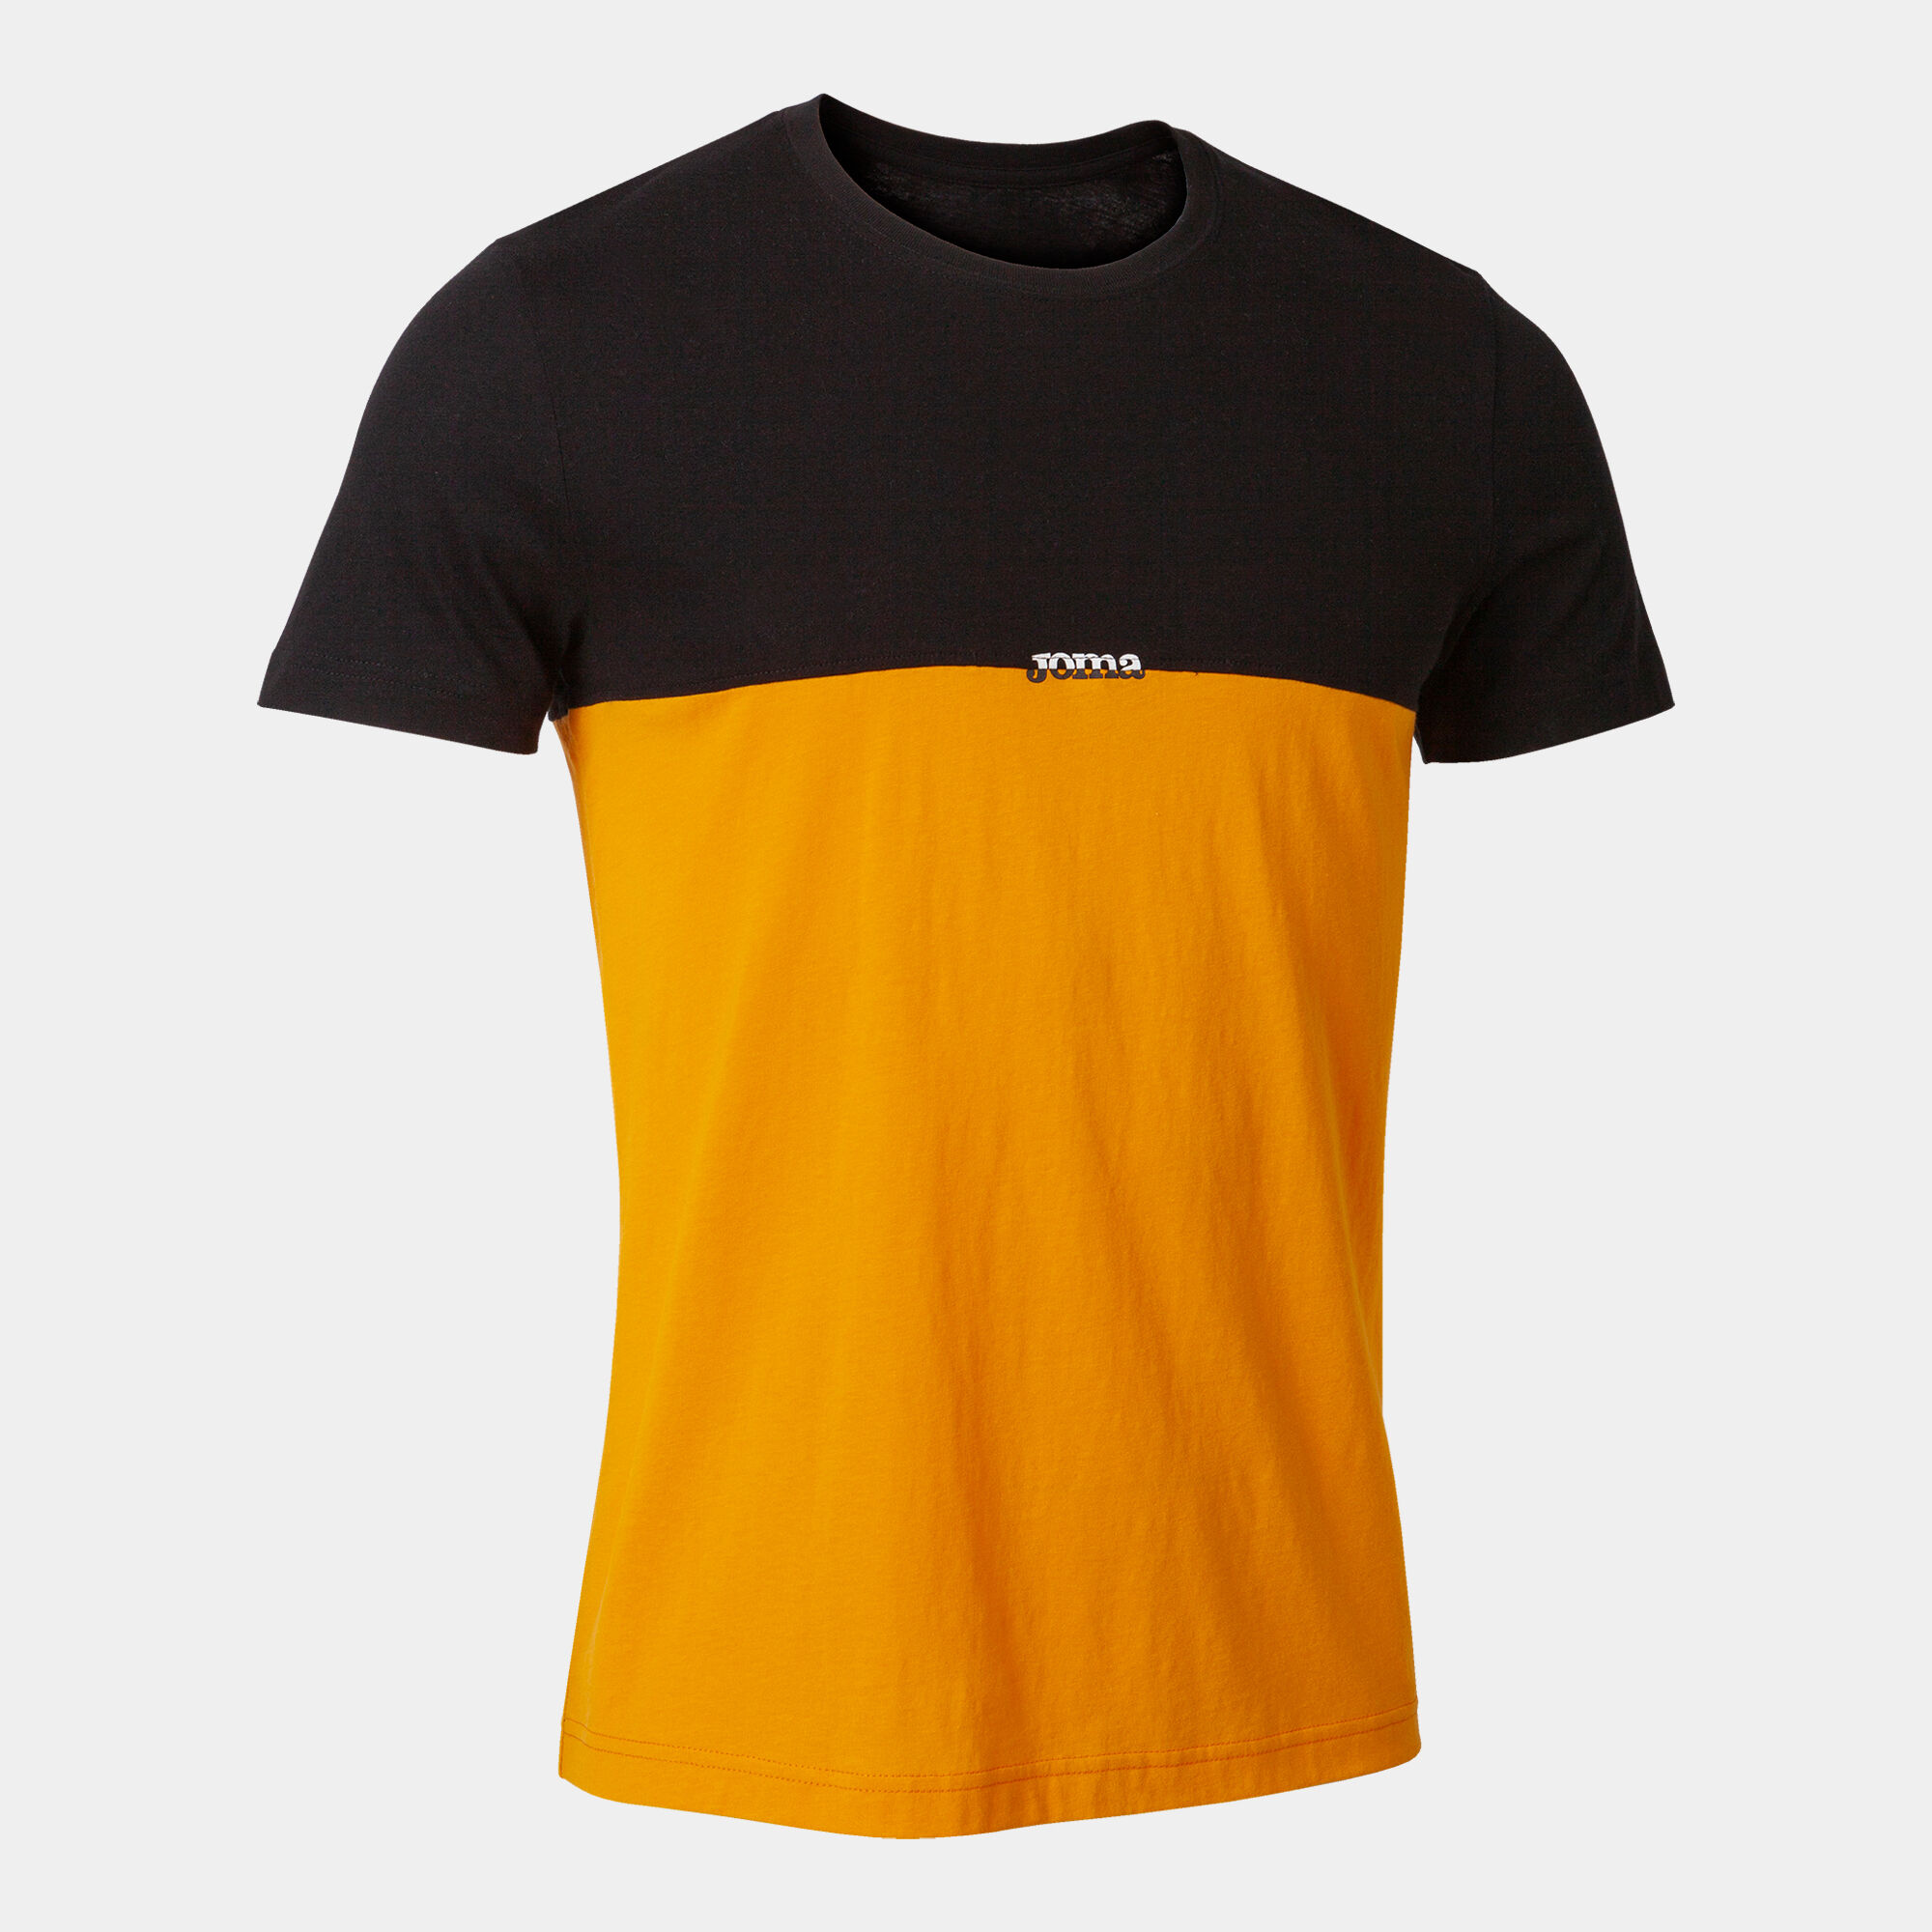 Camiseta manga corta hombre California negro naranja